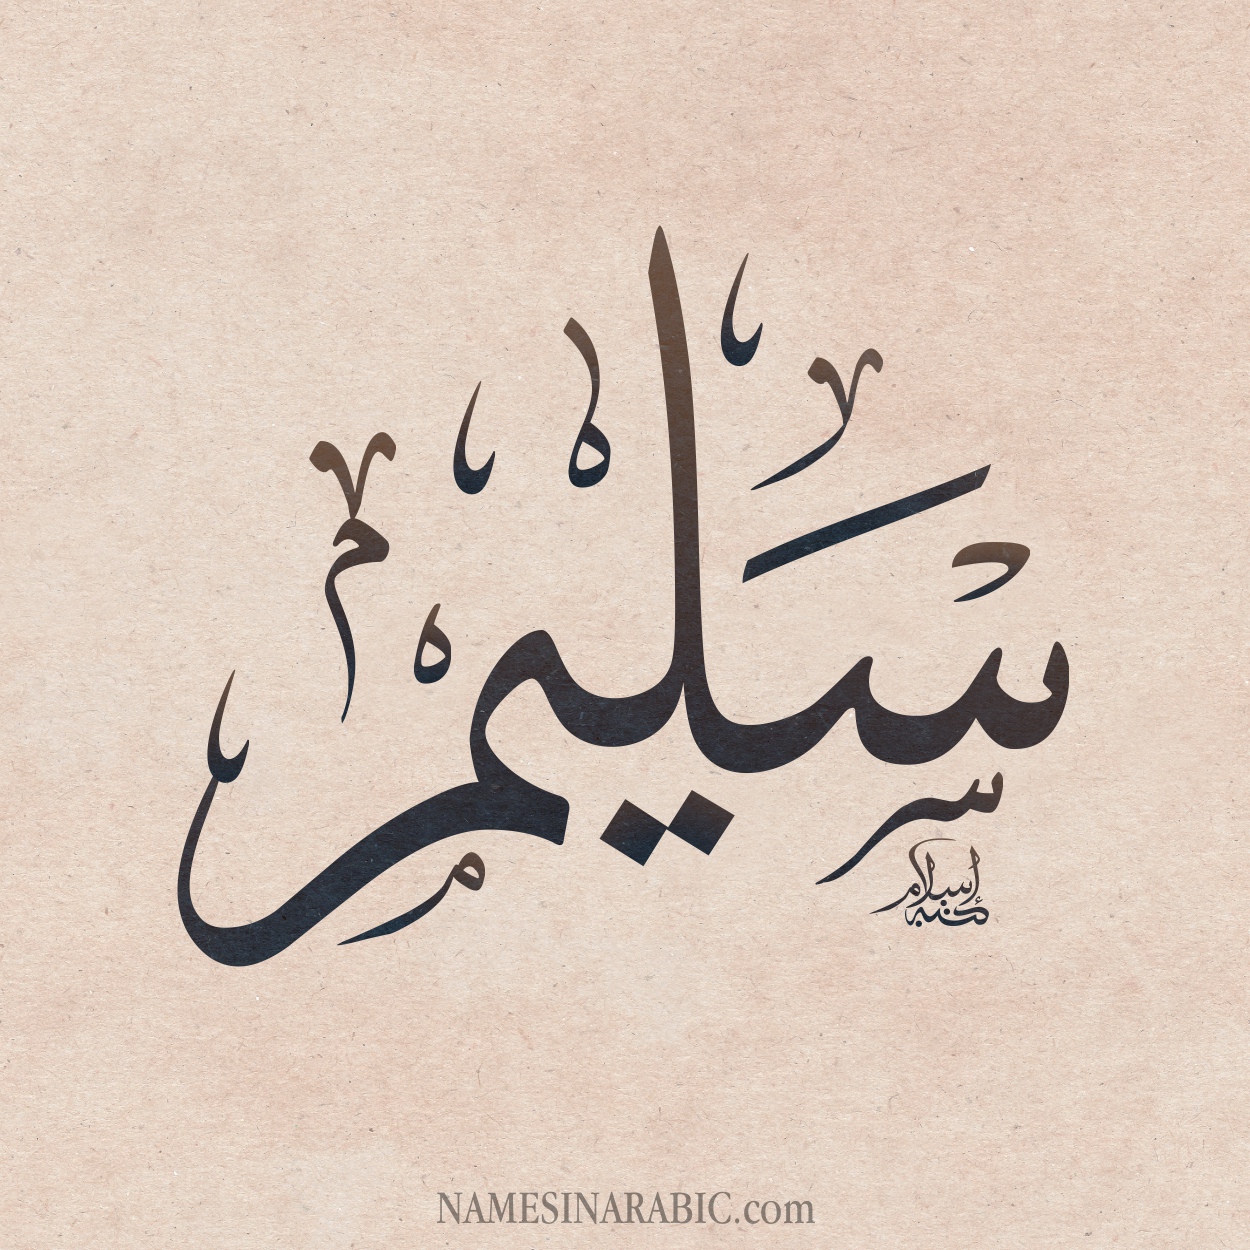 Saleem-Name-in-Arabic-Calligraphy.jpg